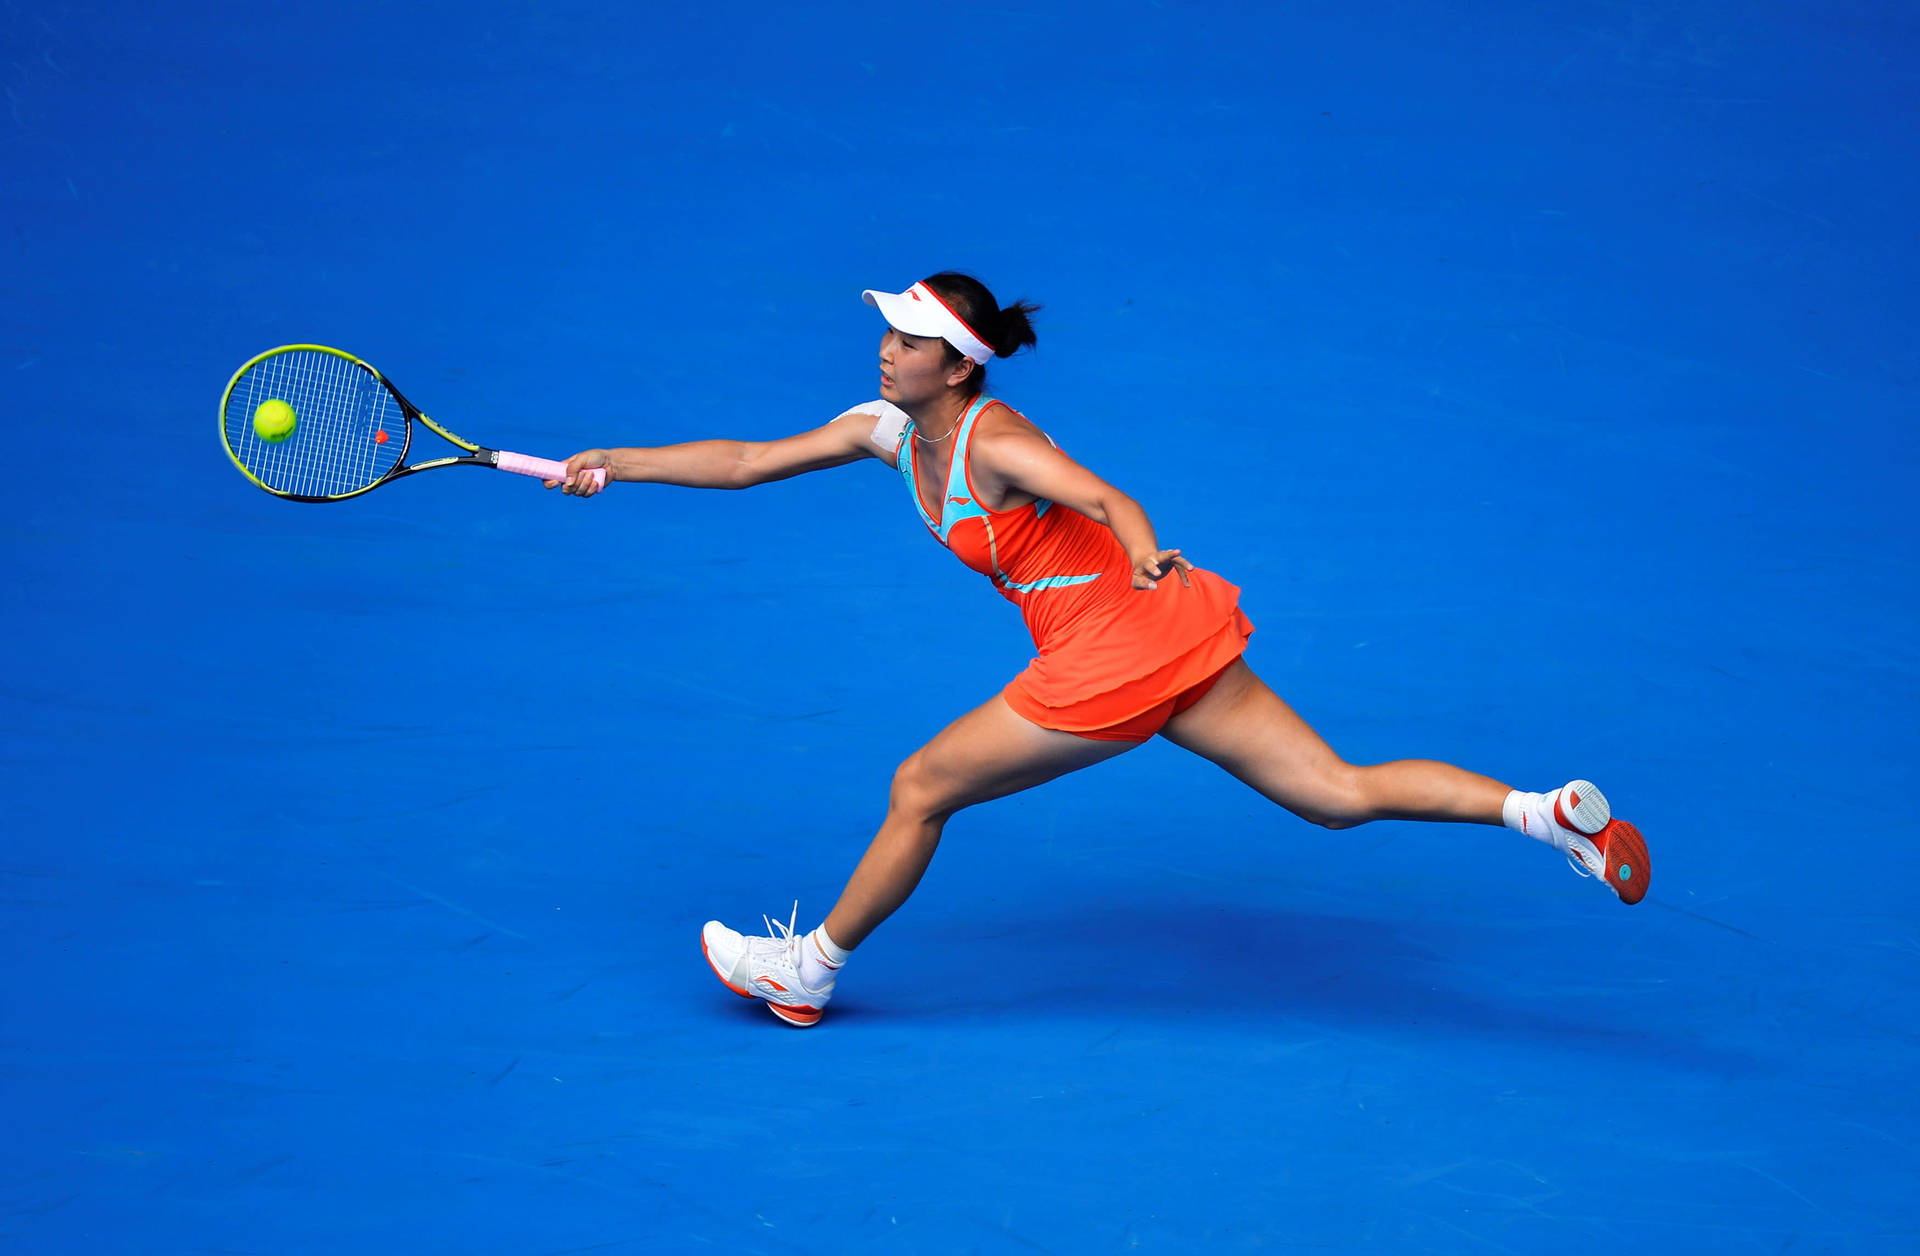 Caption: Tennis Professional Shuai Peng in Action Wallpaper